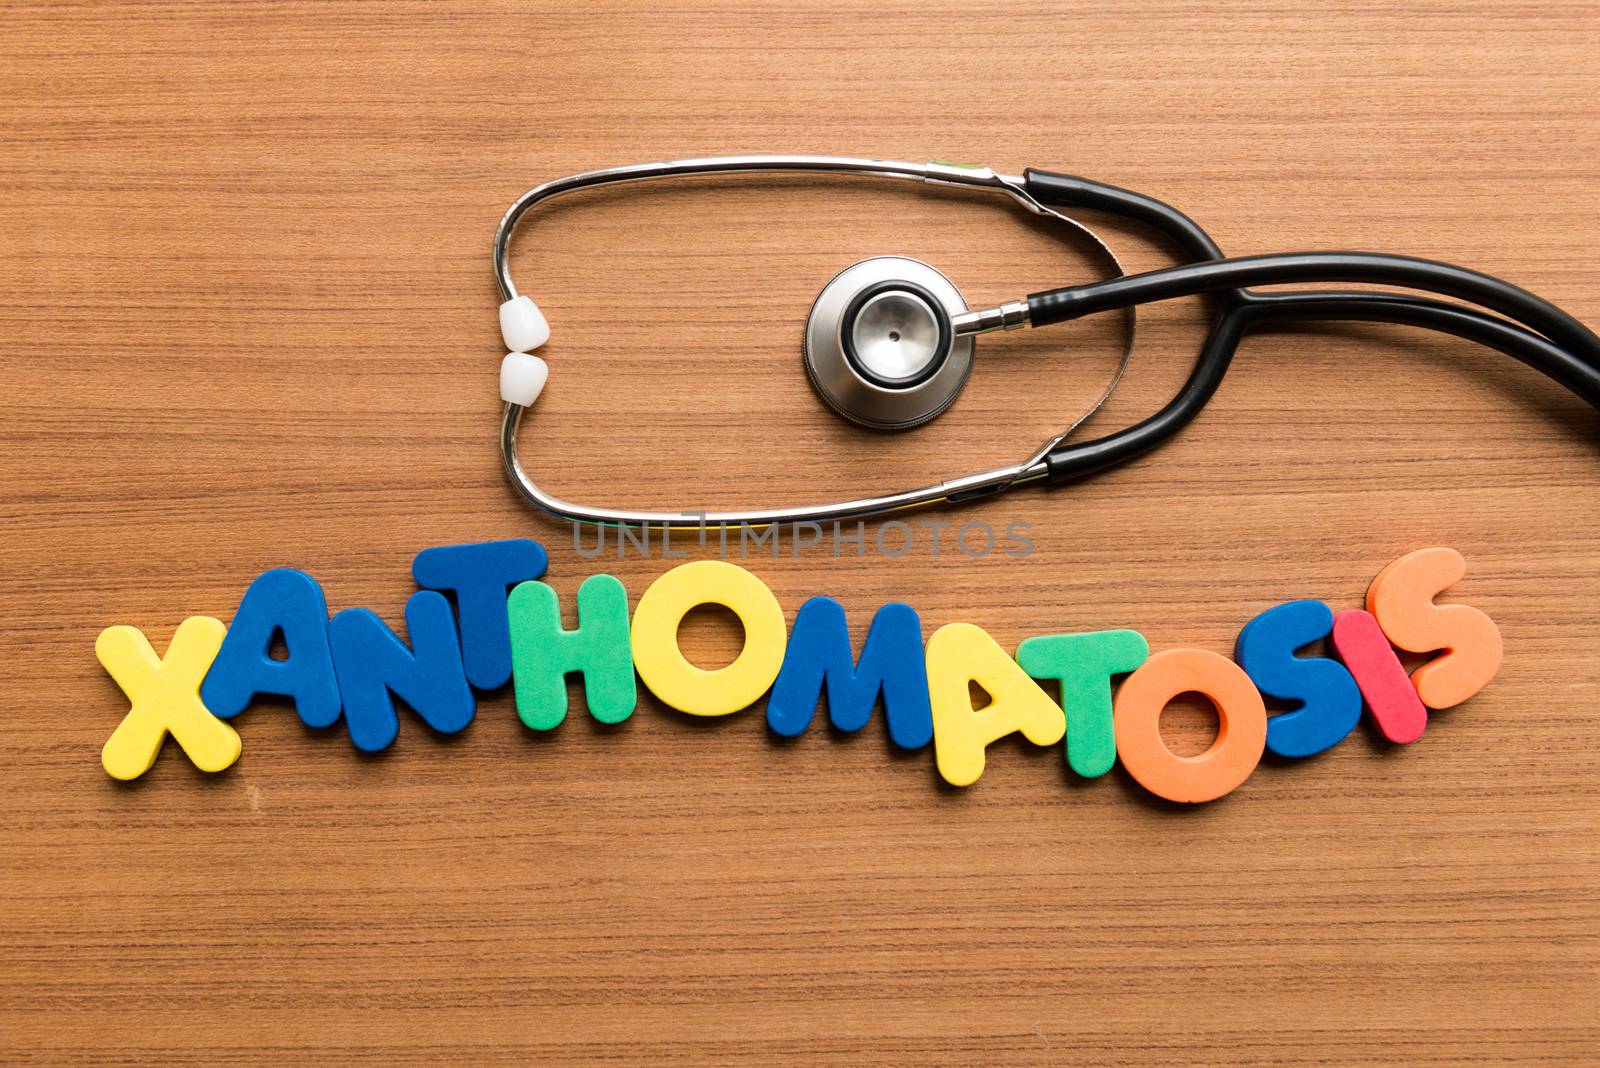 xanthomatosis colorful word with stethoscope by sohel.parvez@hotmail.com